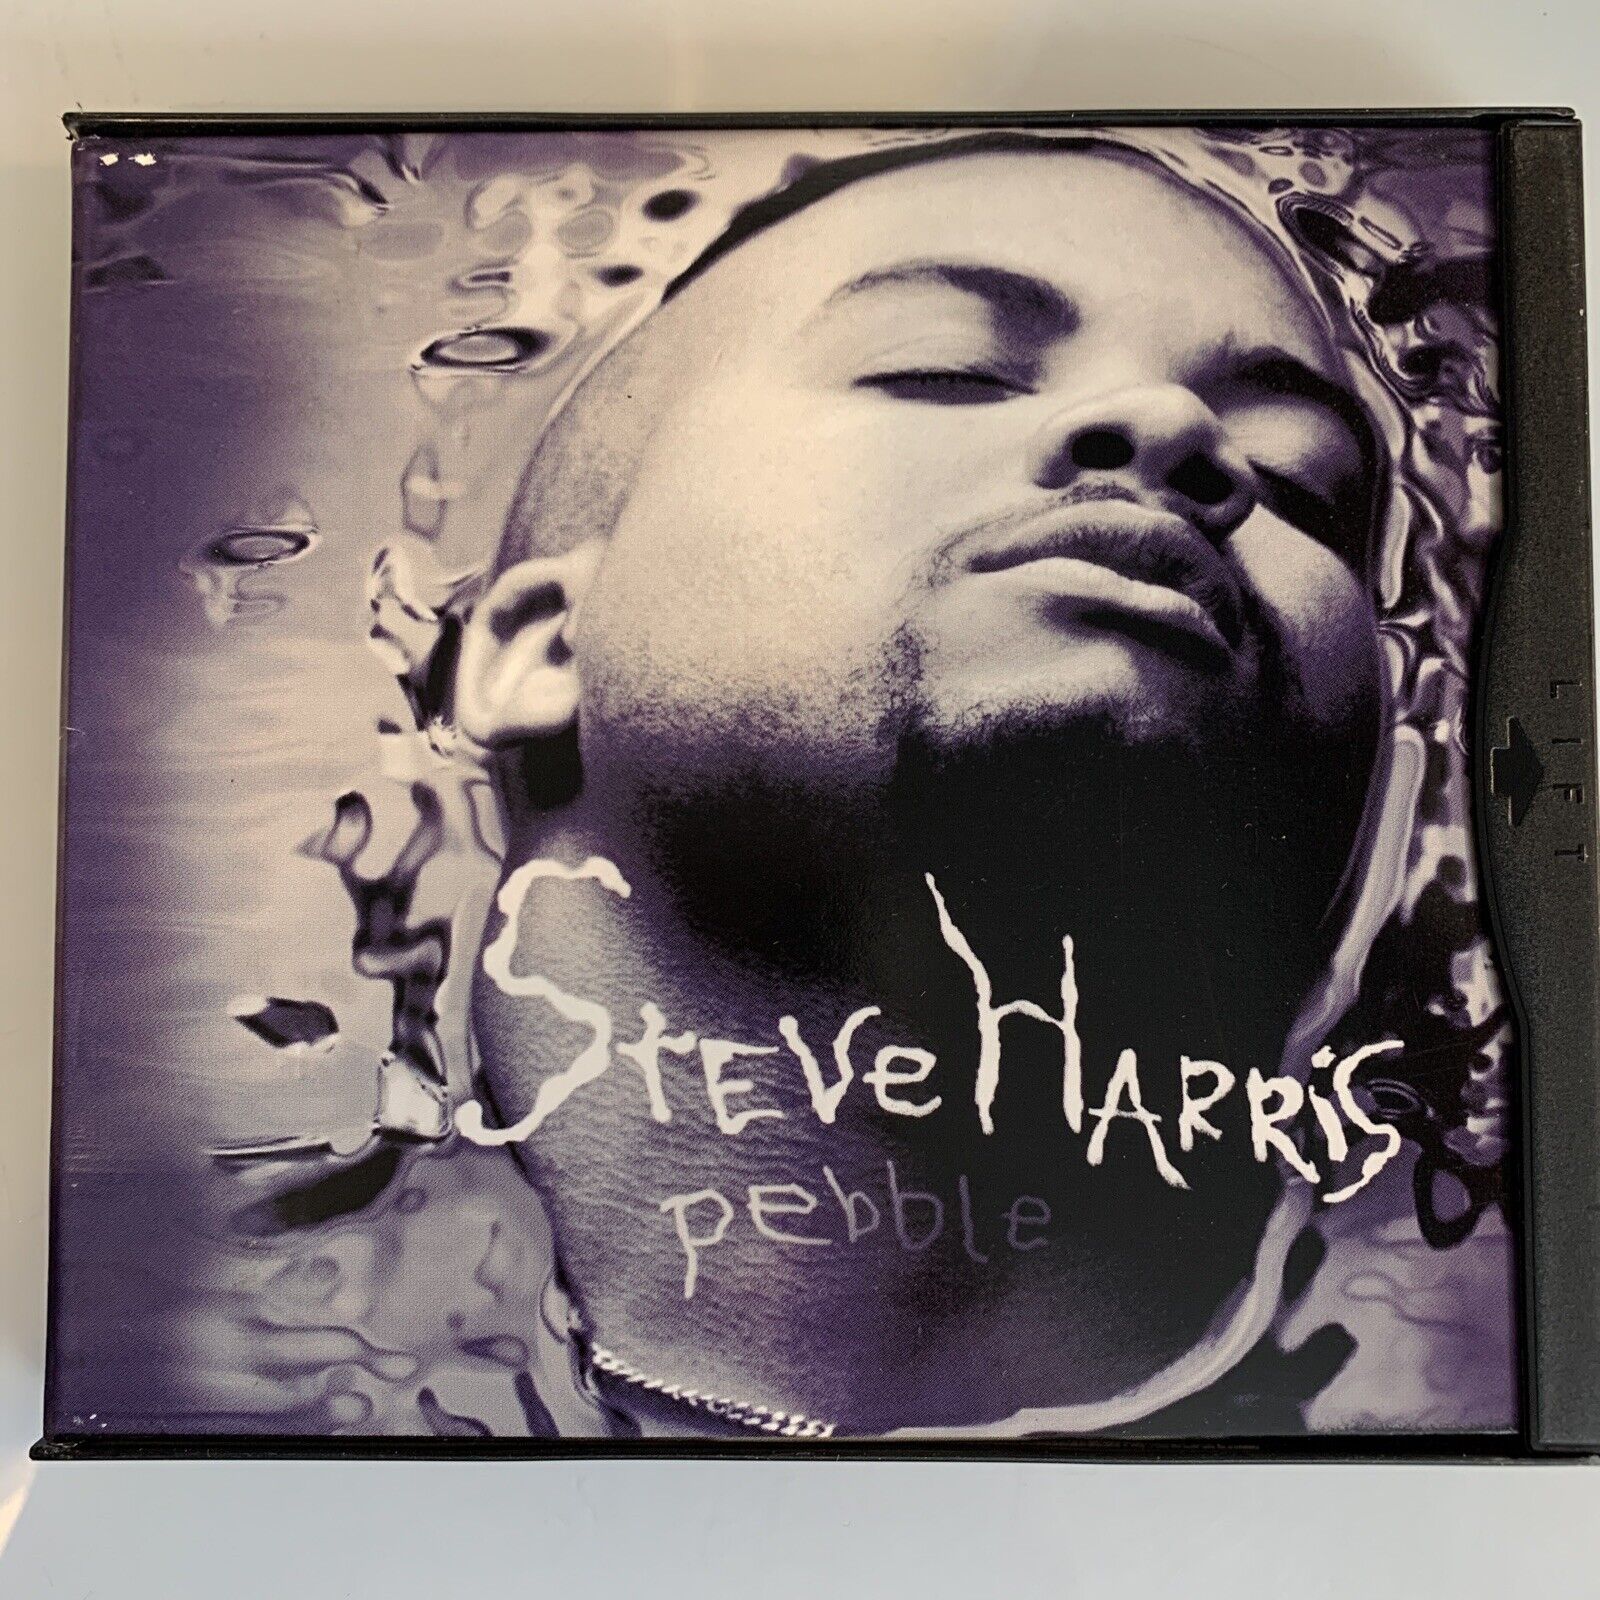 Pebble by Steve Harris (CD, Jan-1995, Earth Music)